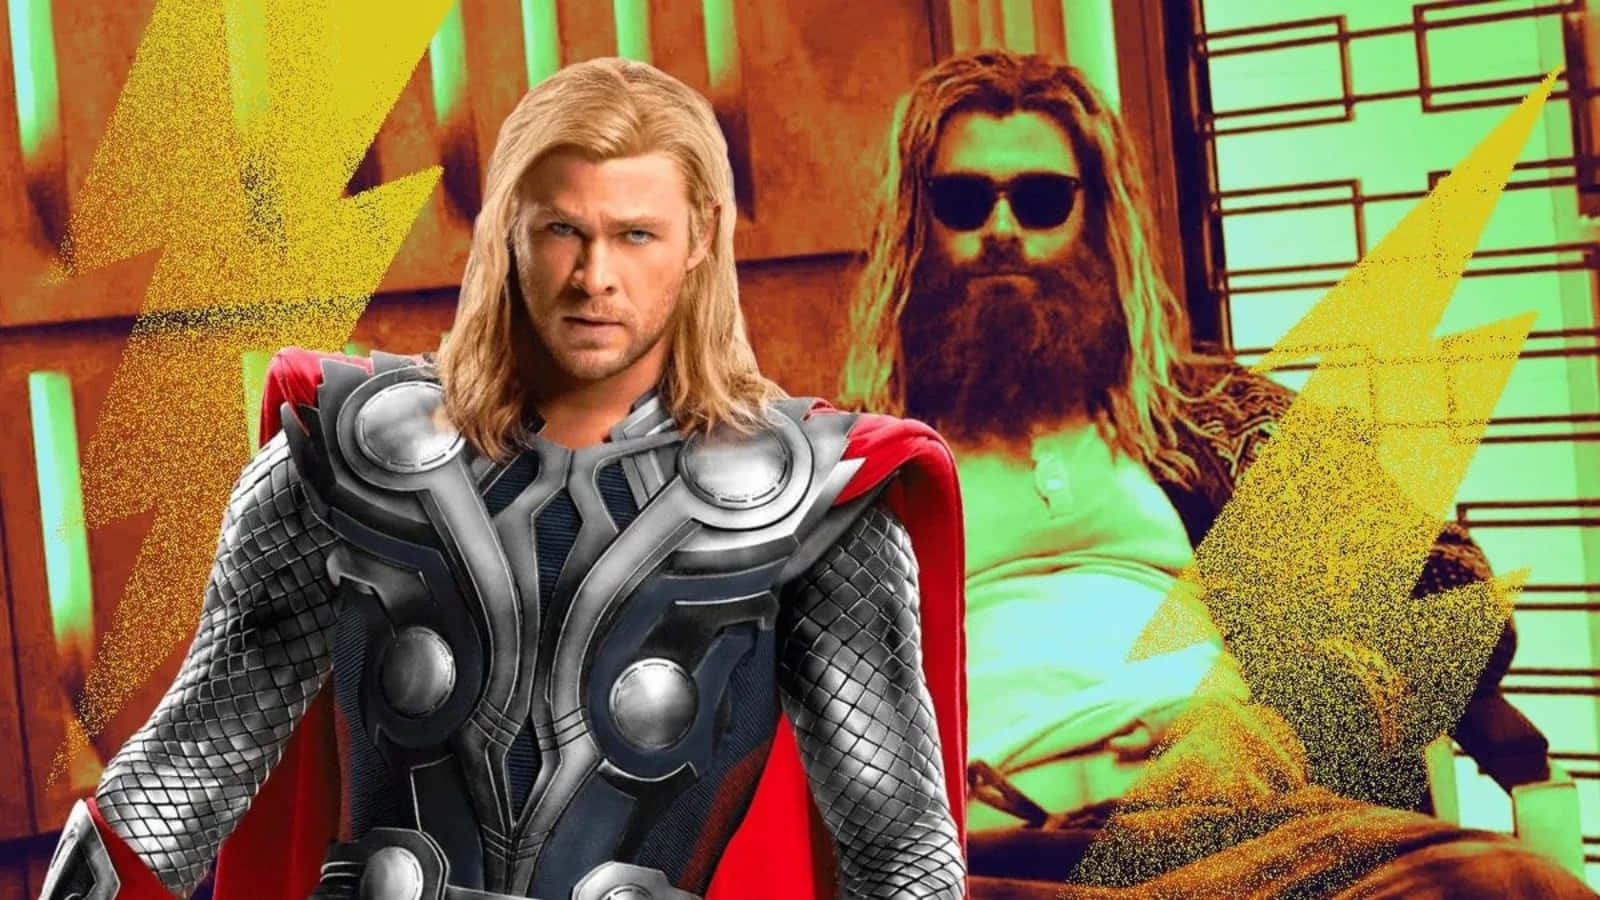 Funny Marvel Avengers Endgame Fat Thor Picture